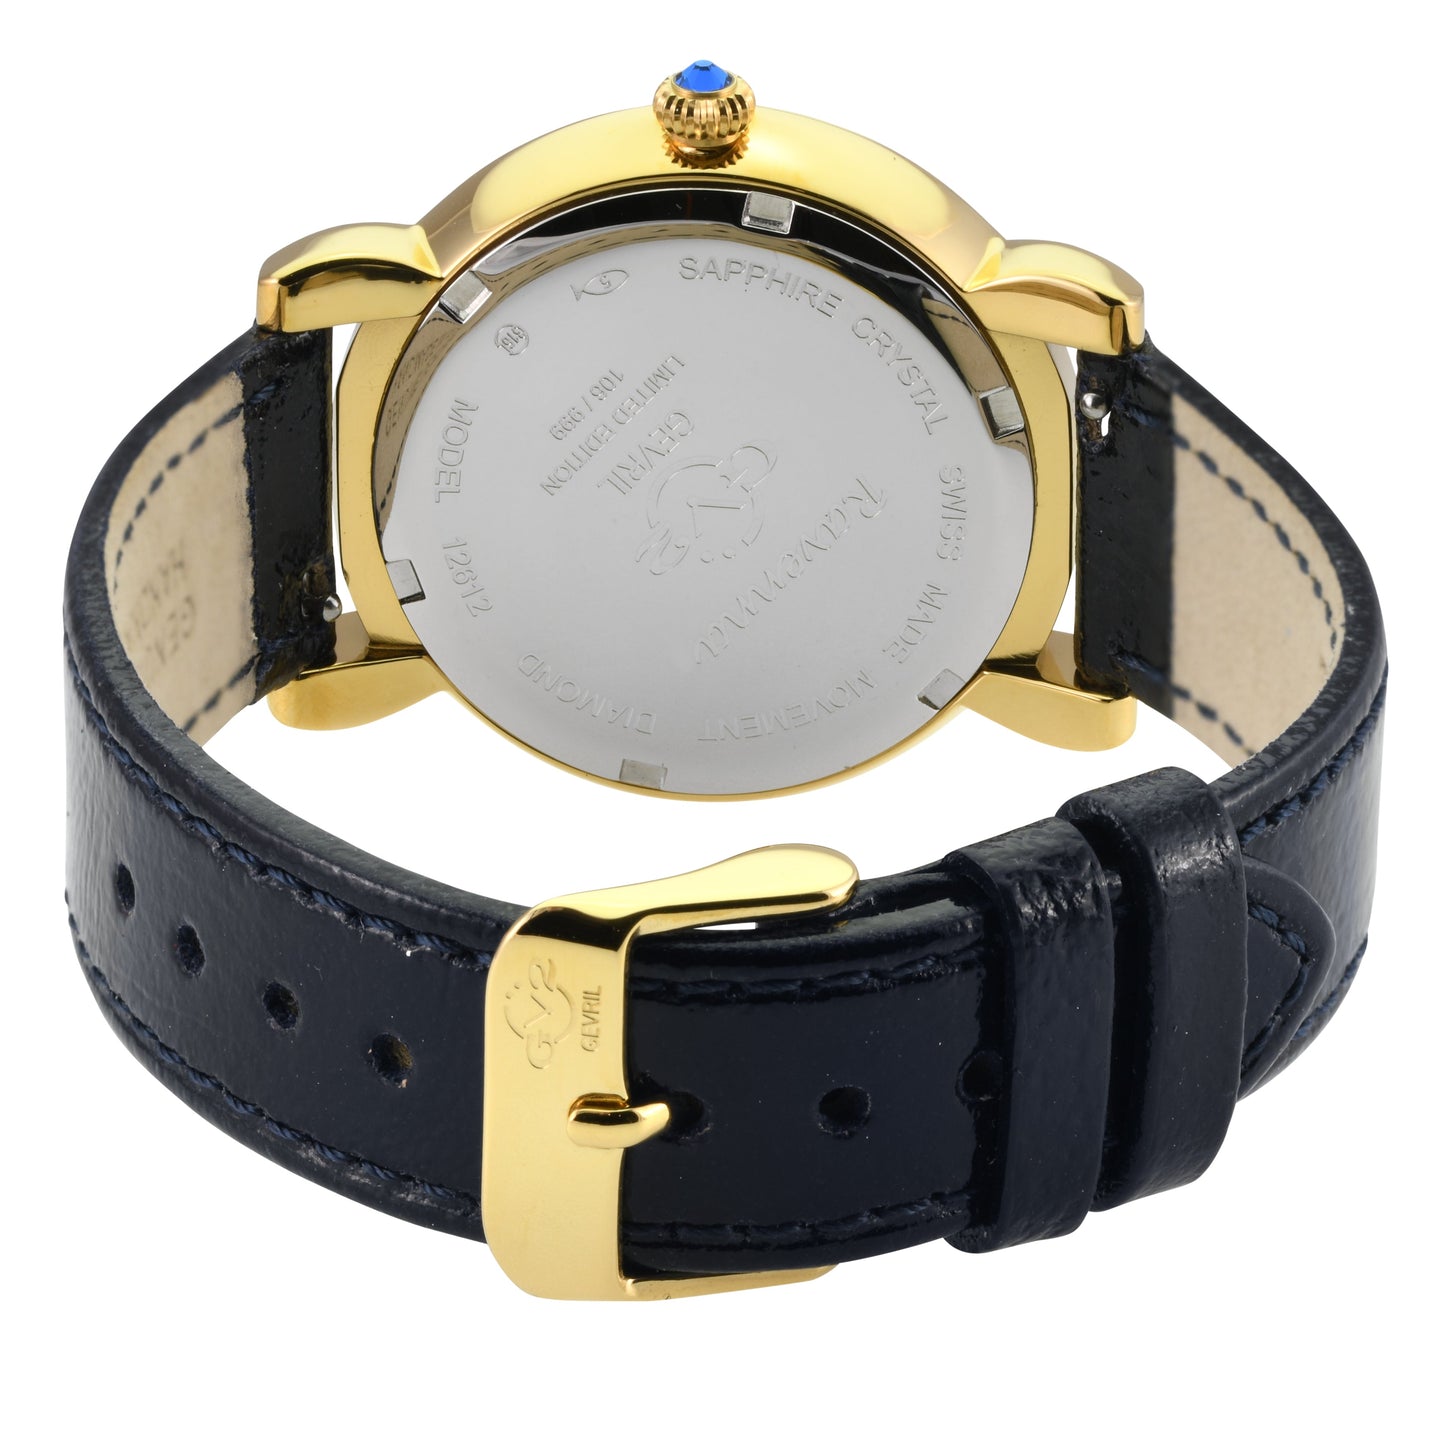 Gevril-Luxury-Swiss-Watches-GV2 Ravenna Diamond-12612